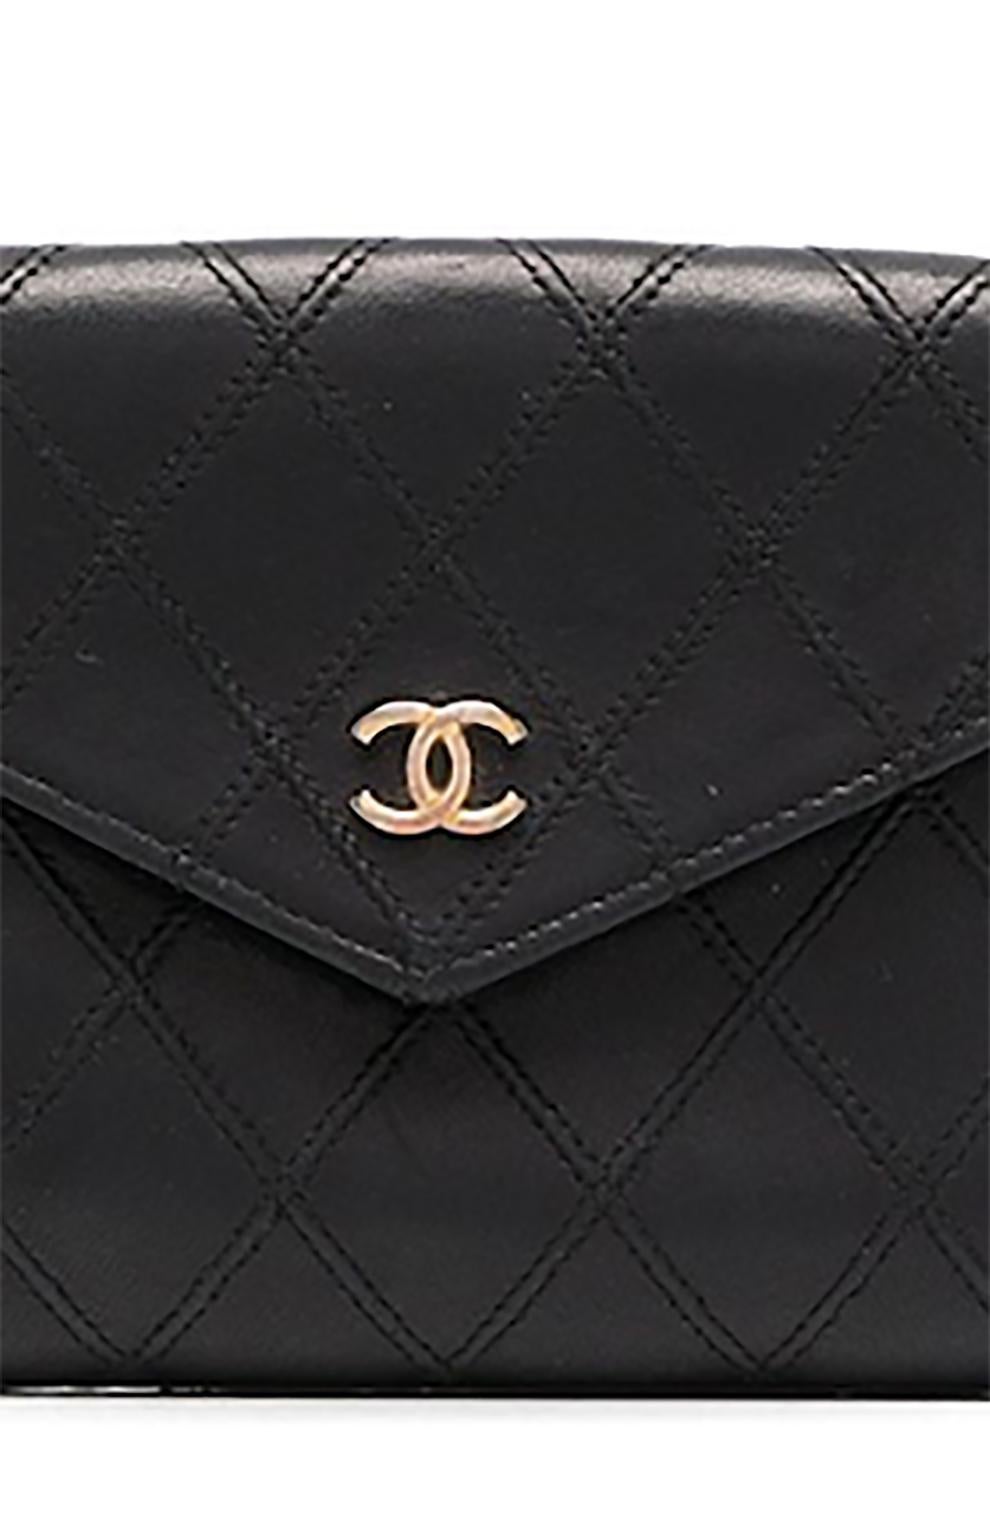 Women's or Men's Chanel Black Quilted Lamb Wallet